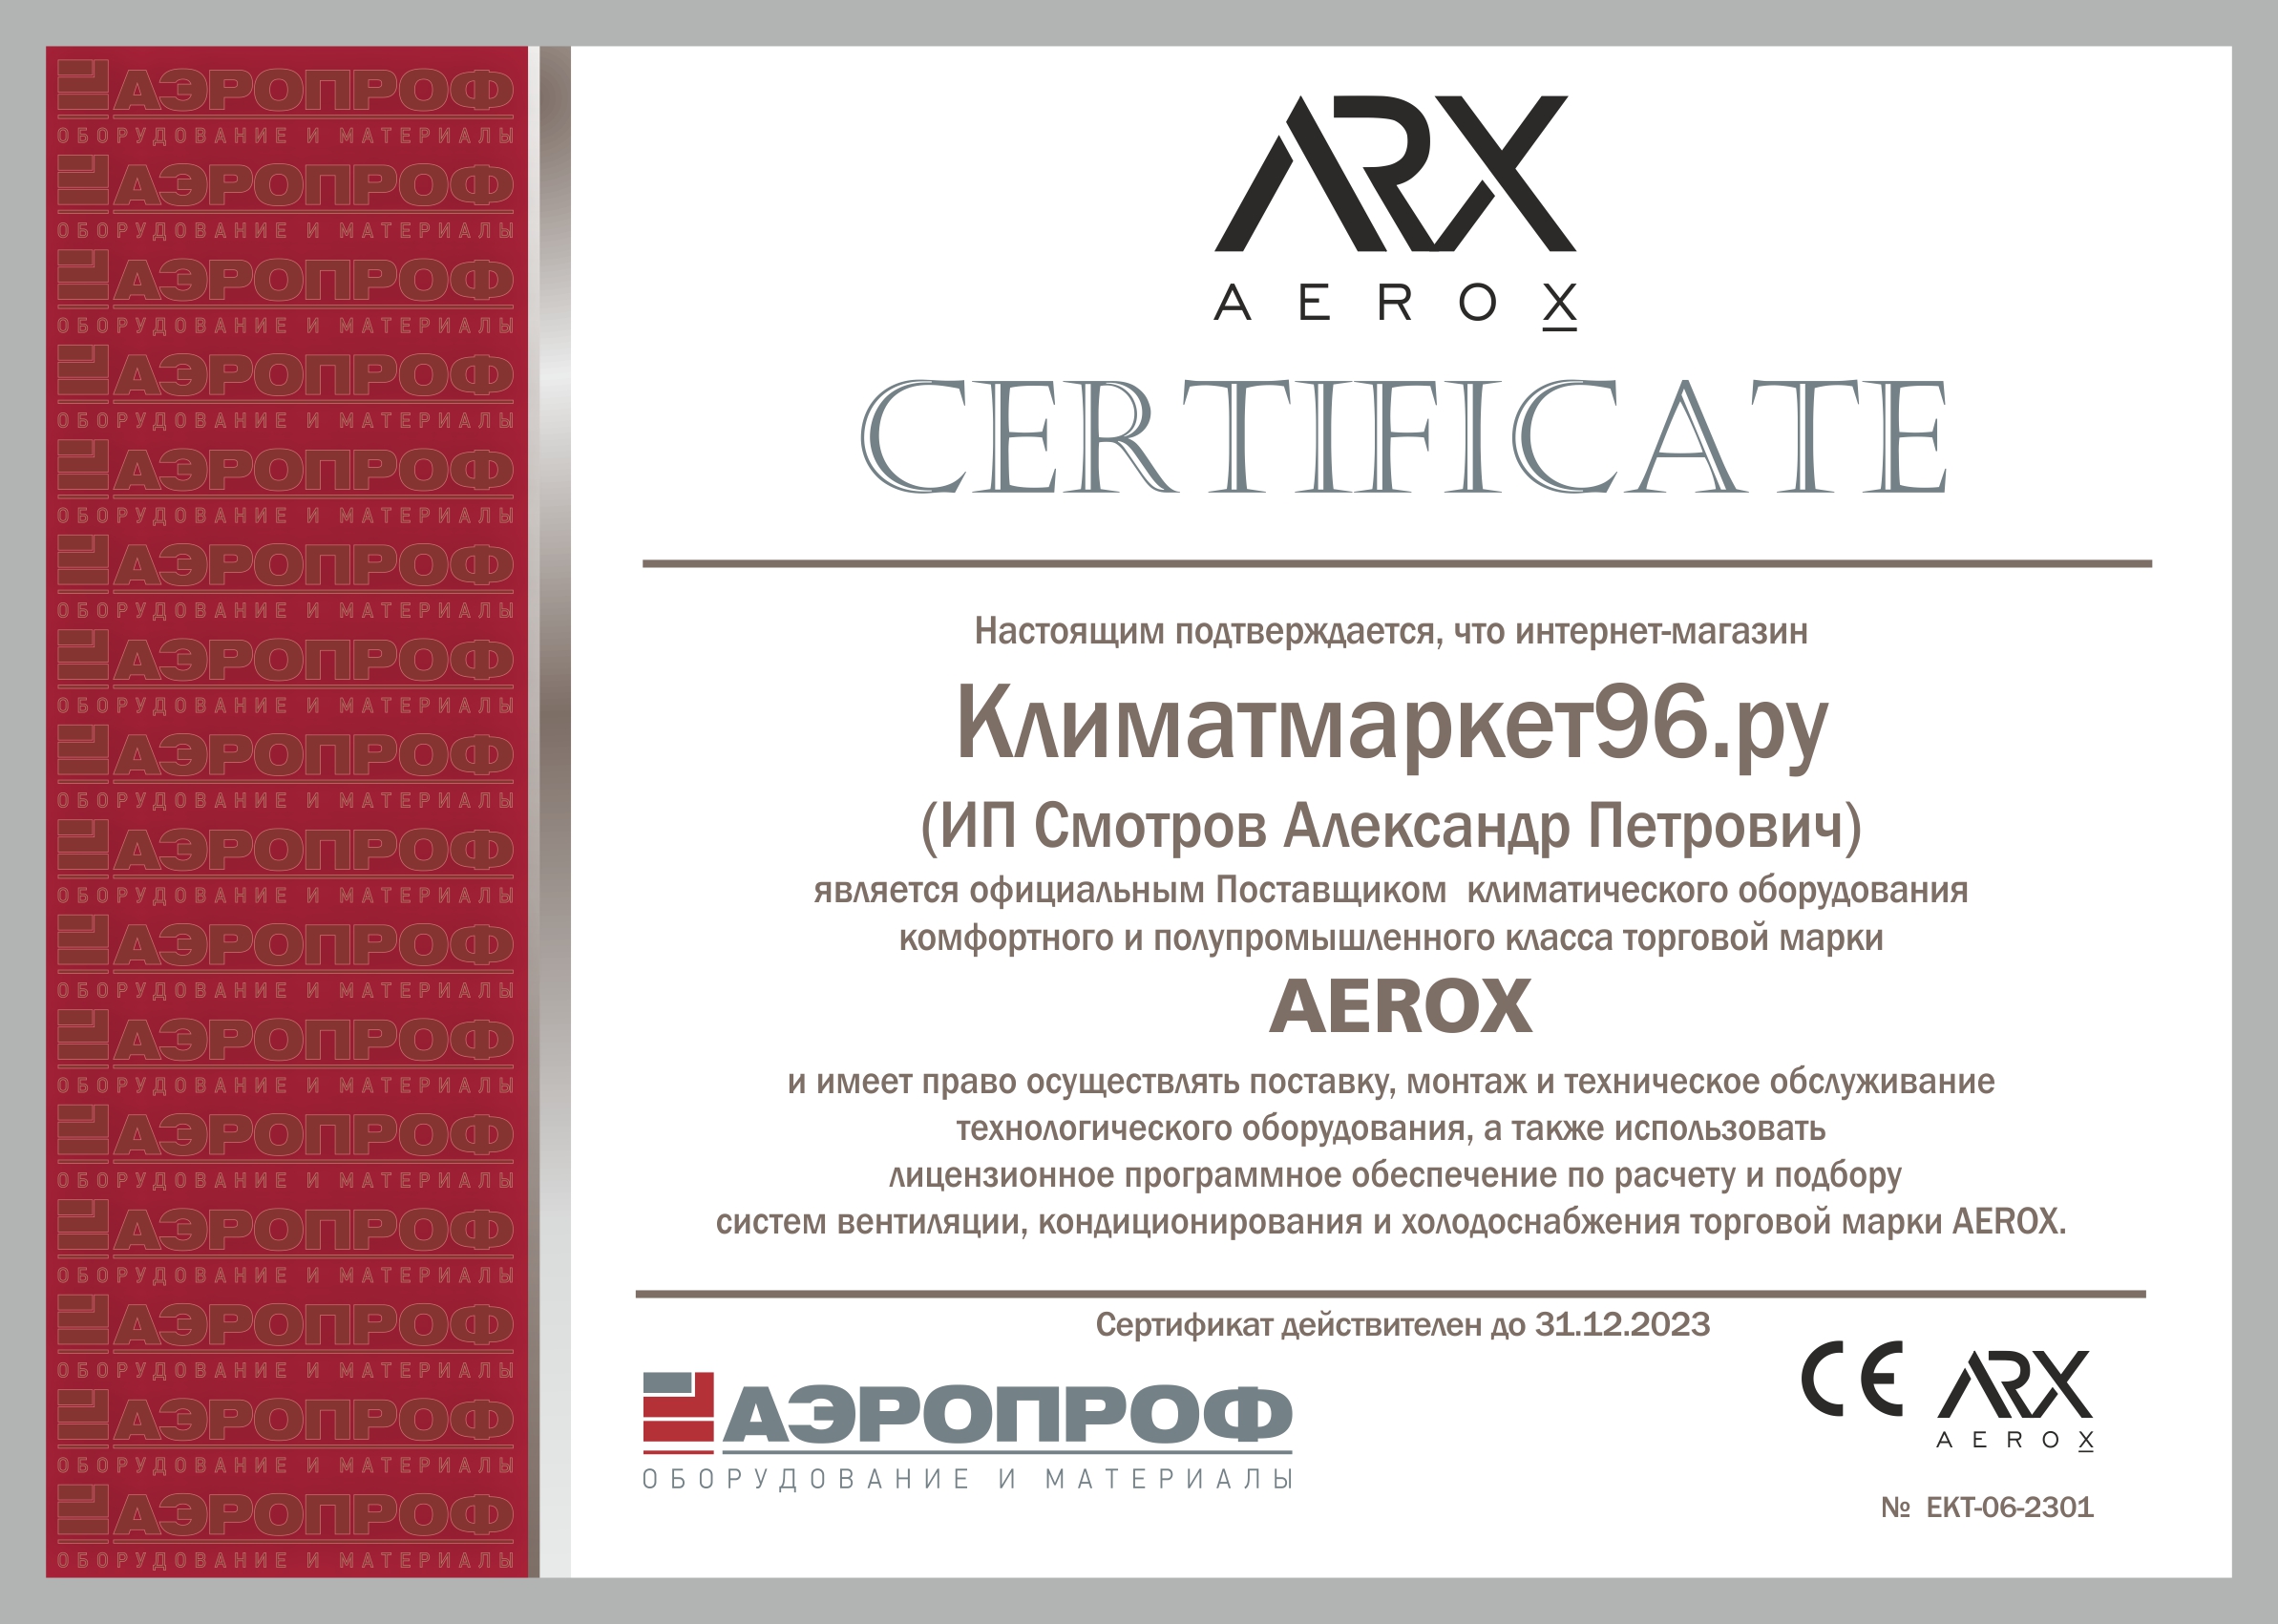 sert23-km96-arx Kondicioner Aero ARS-II-12IHN21D6-01/ARS-II-12OHN21D6-01 kypit v Ekaterinbyrge v internet-magazine KlimatMarket96.ry Сертификат официального дилера